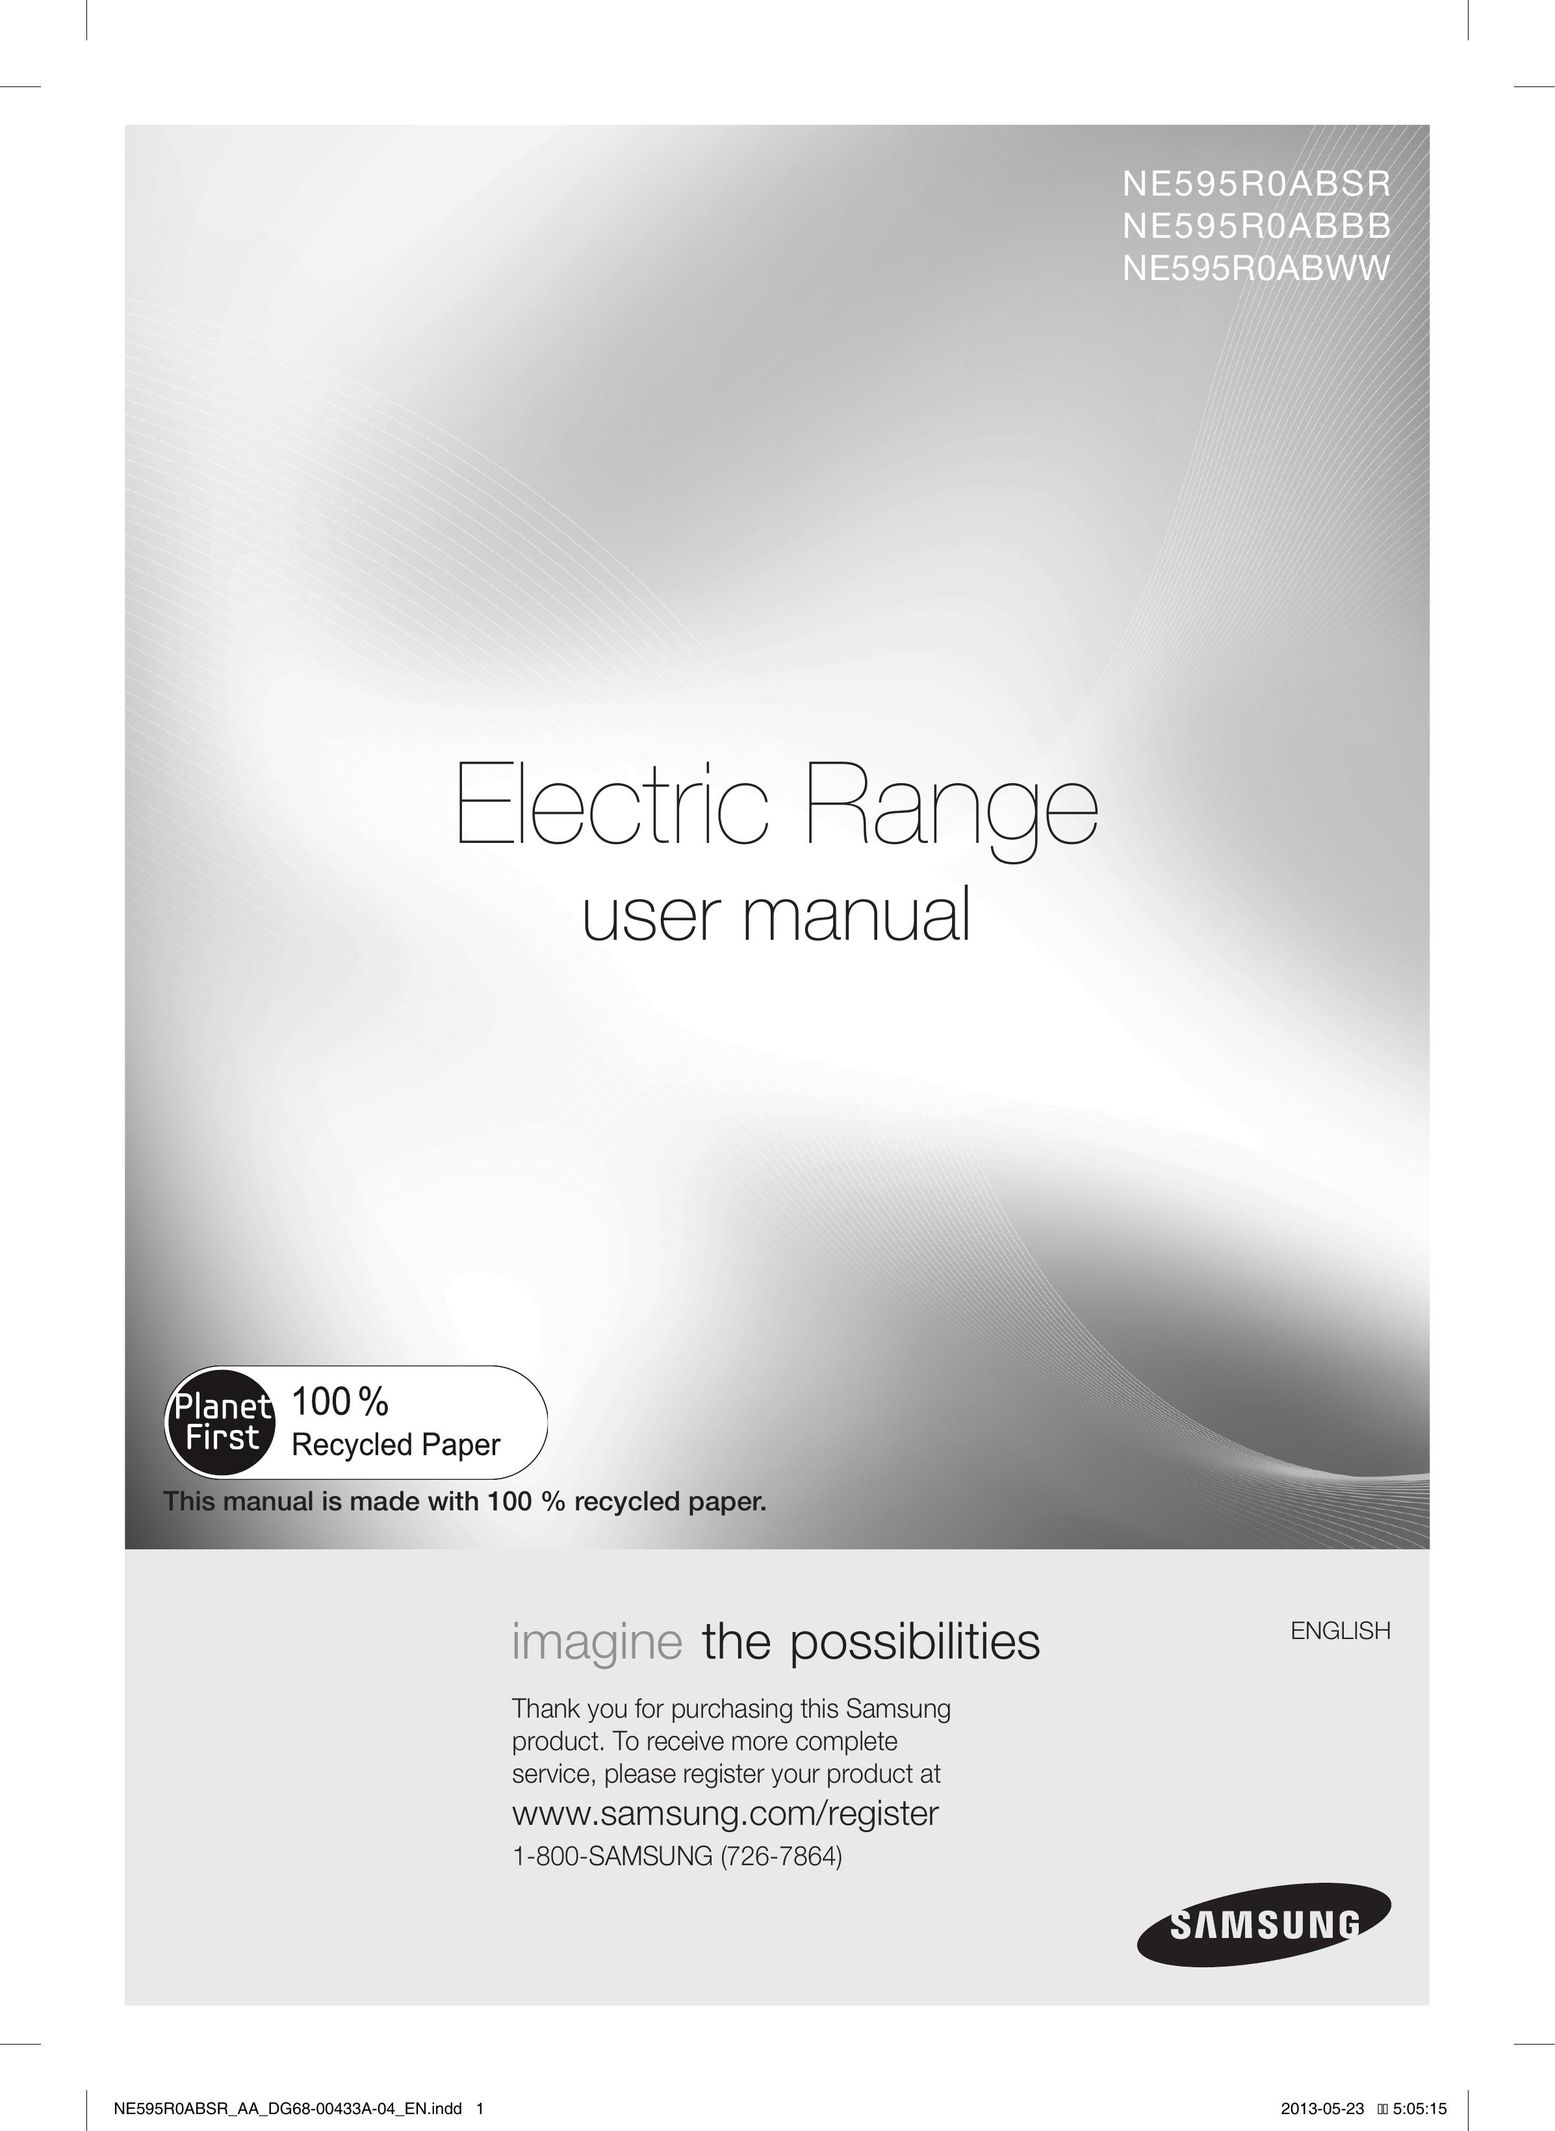 Samsung NE595R0ABBB Range User Manual